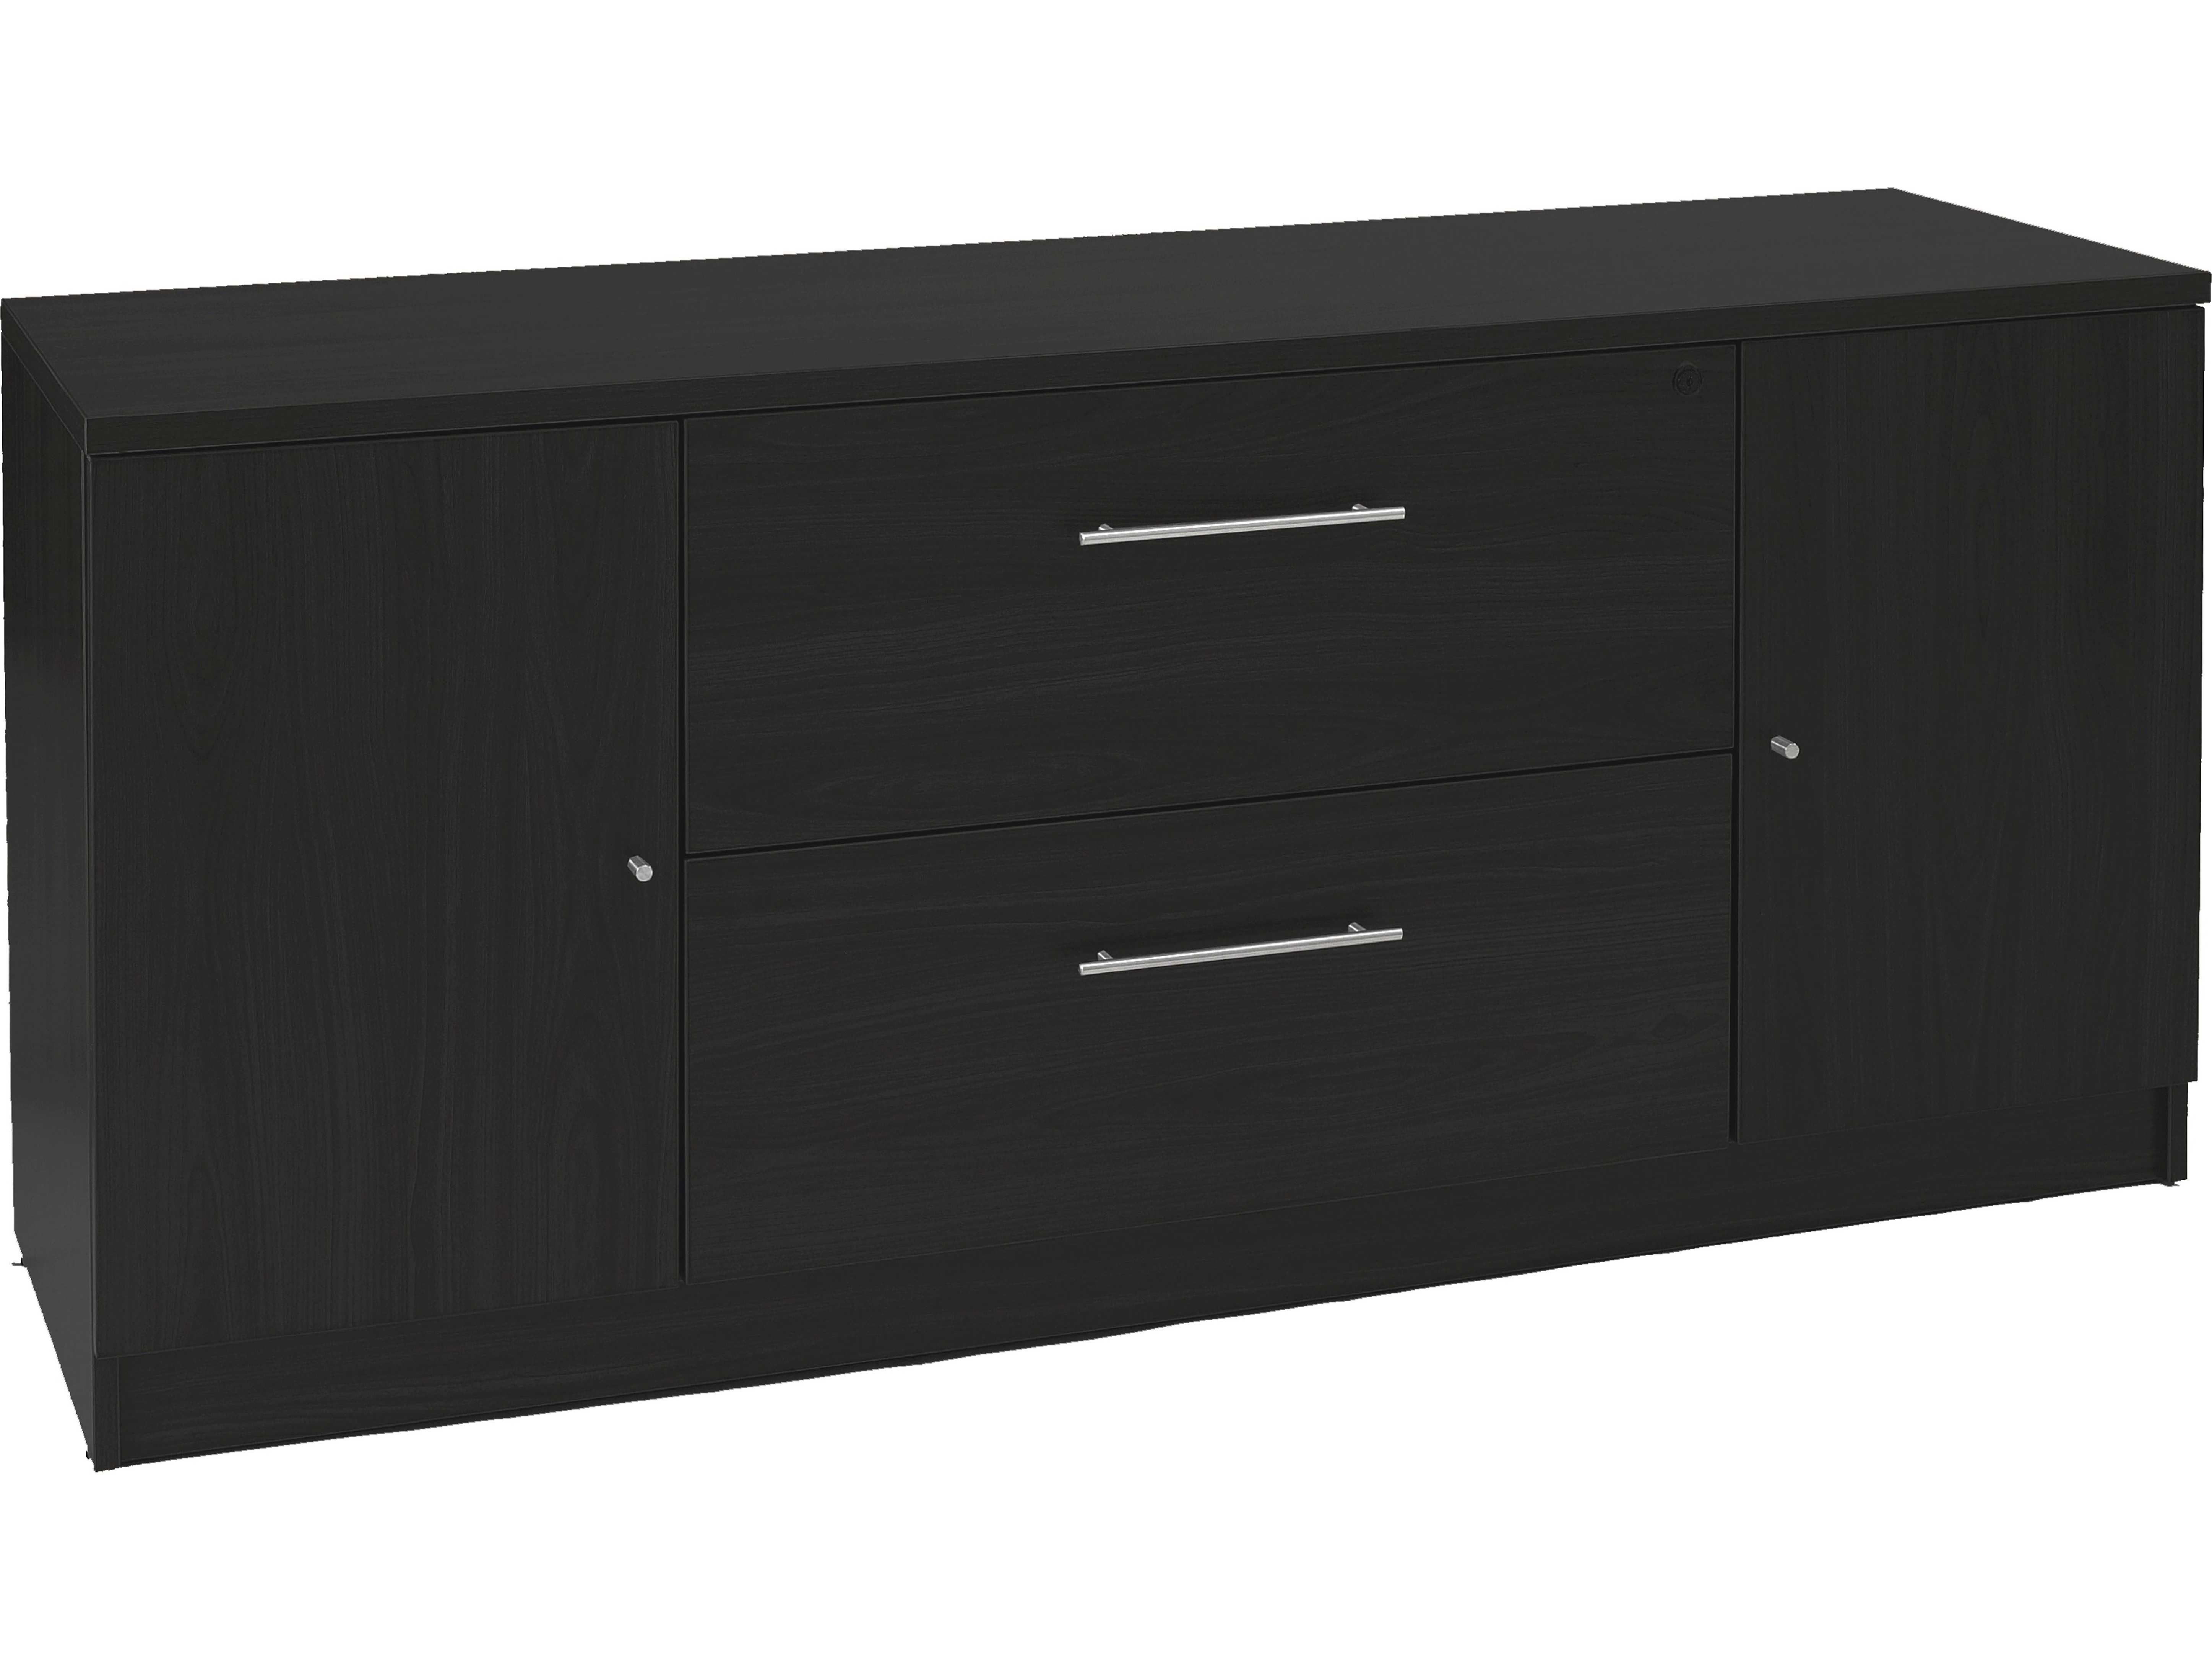 Unique Furniture 100 Series Espresso Credenza File Cabinet throughout proportions 5786 X 4341